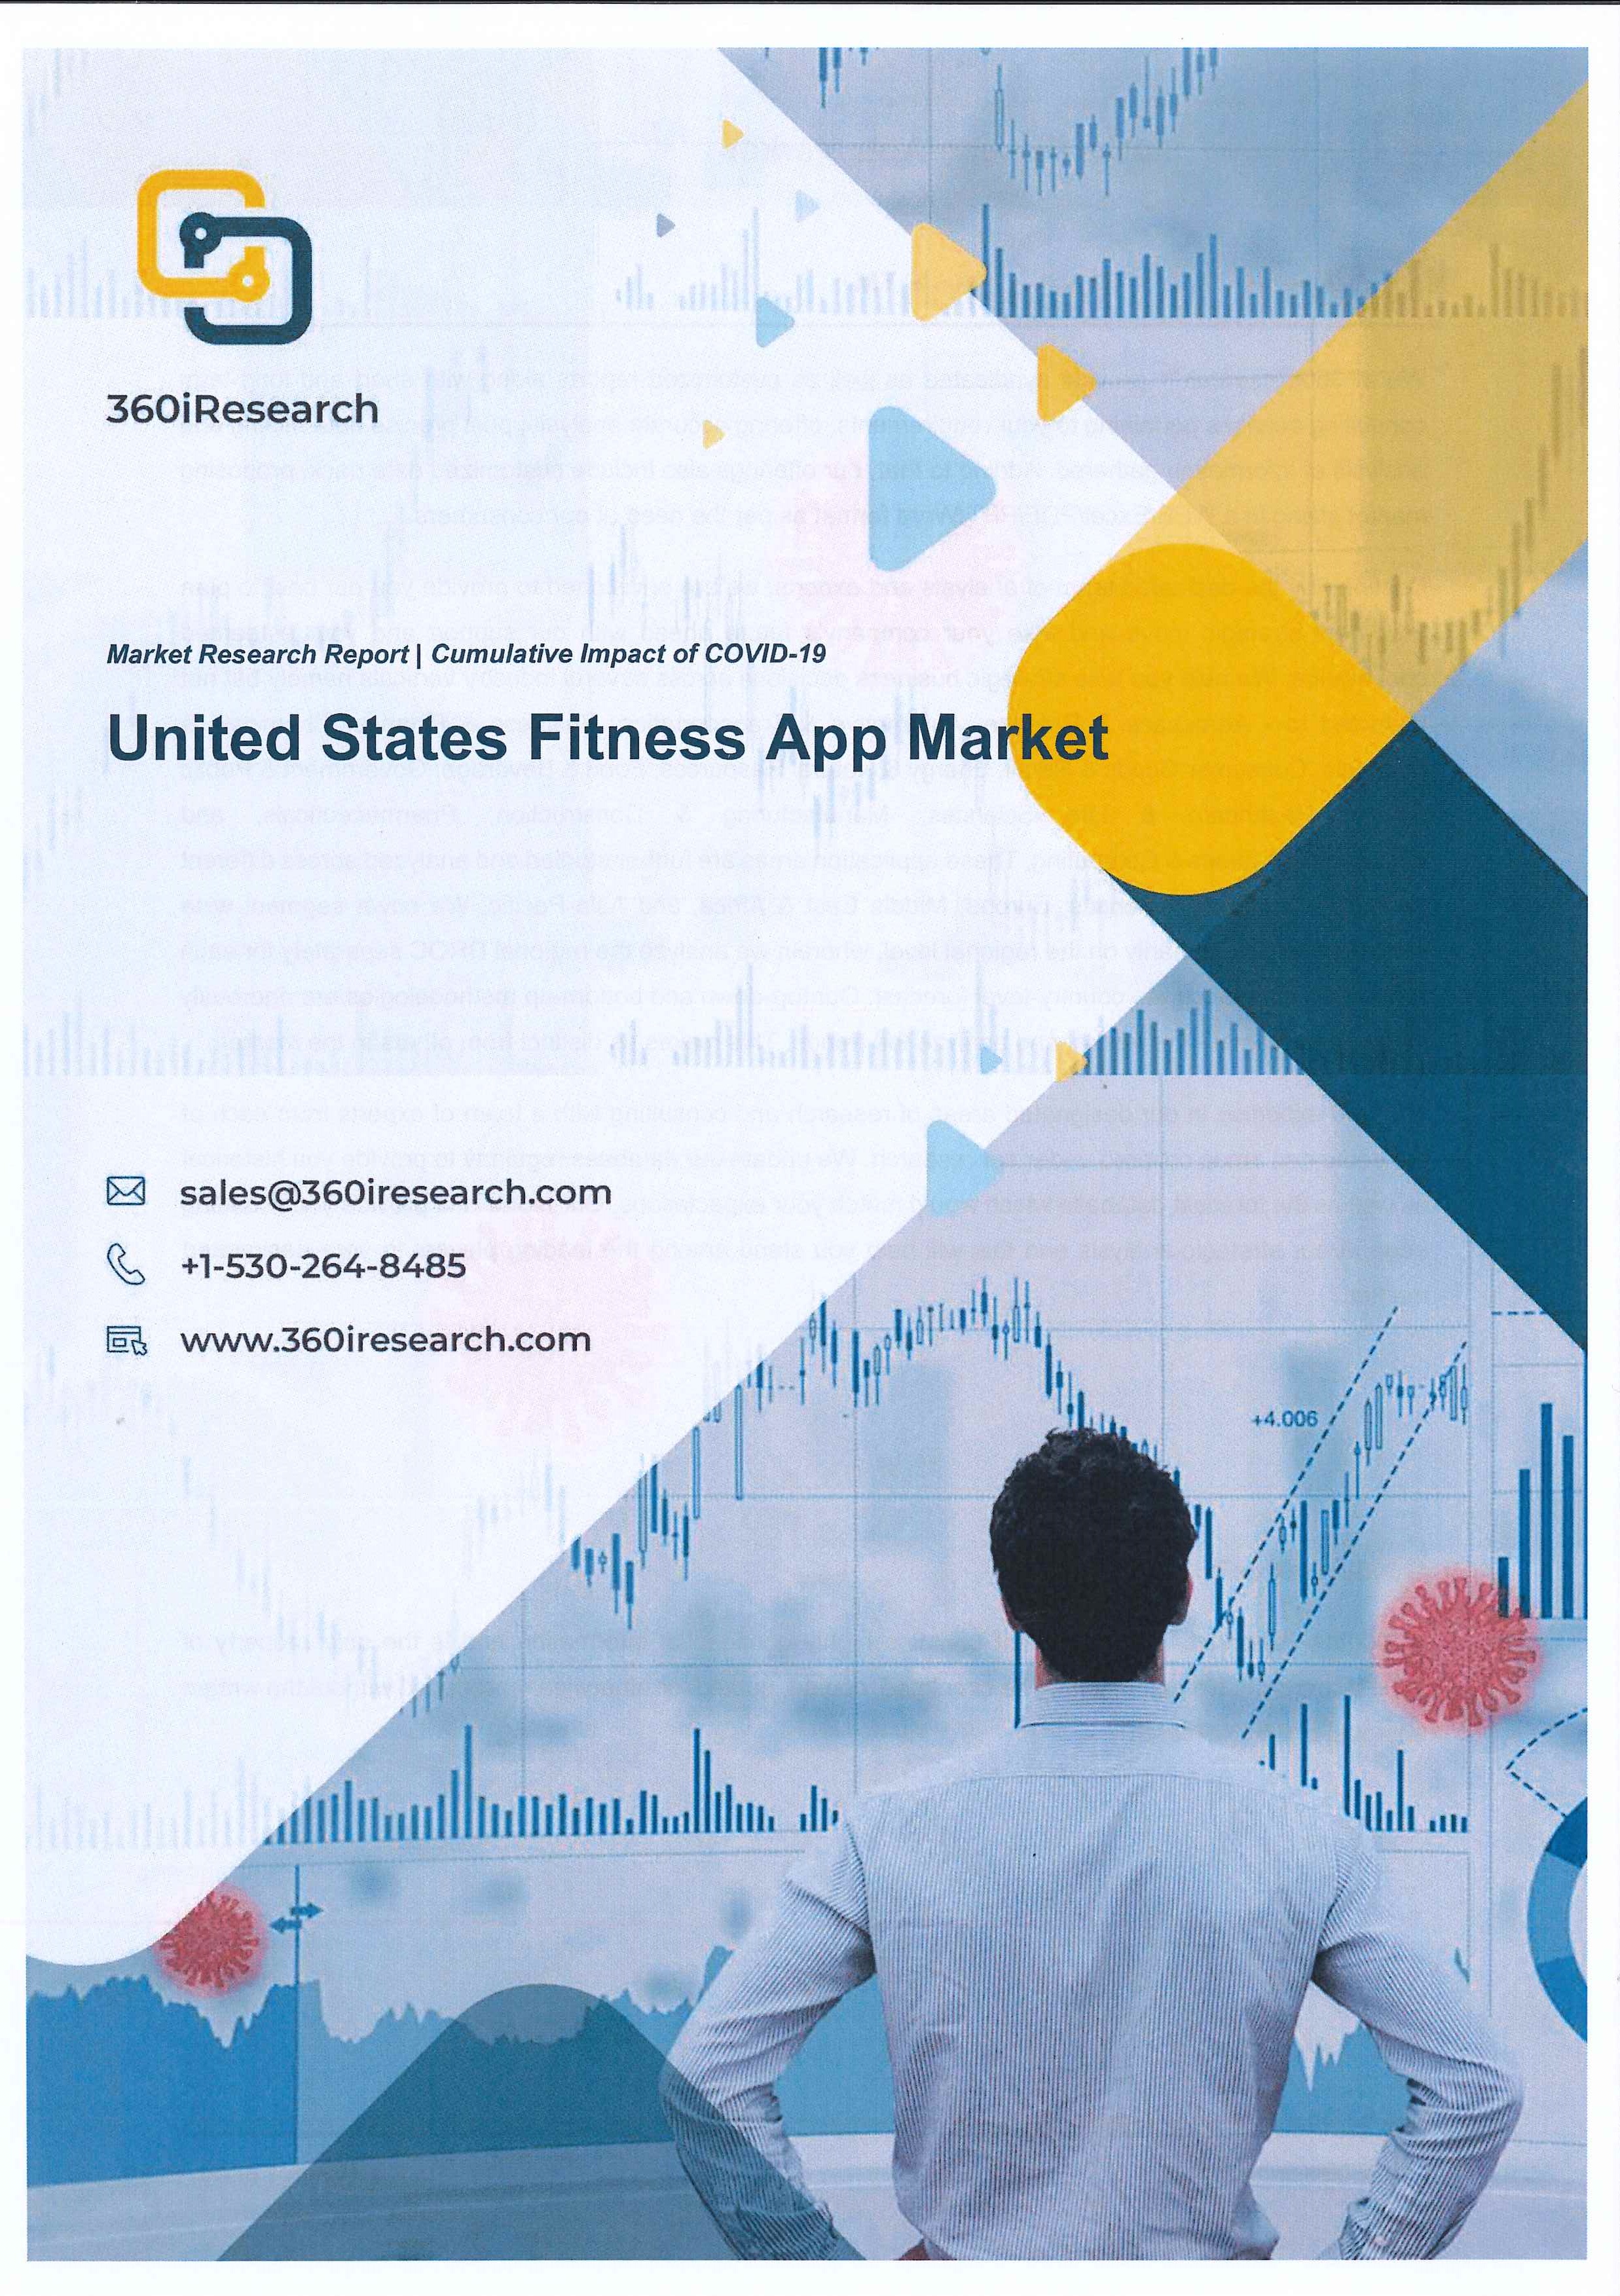 United States fitness app market [e-book]:market research report:cumulative impact of COVID-19